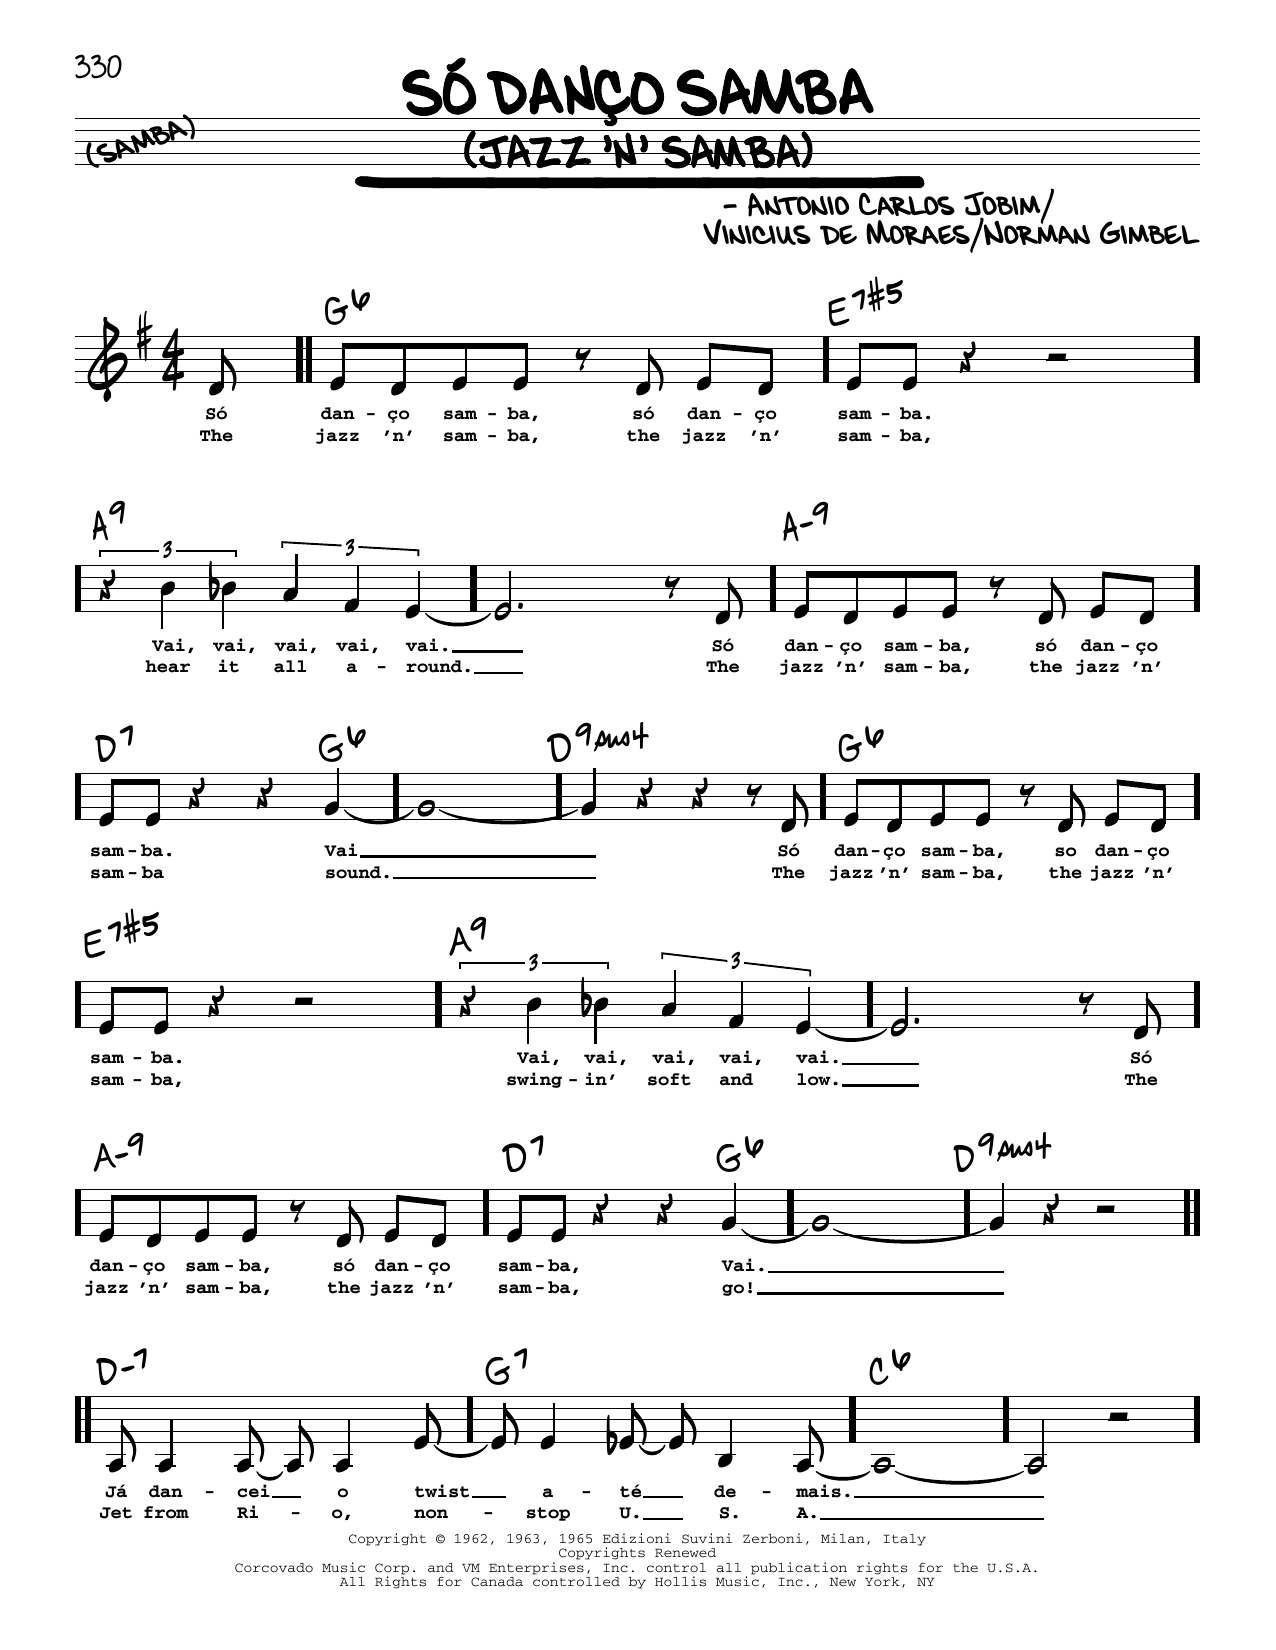 Antonio Carlos Jobim Jazz 'N' Samba (So Danco Samba) (Low Voice) Sheet Music Notes & Chords for Real Book – Melody, Lyrics & Chords - Download or Print PDF